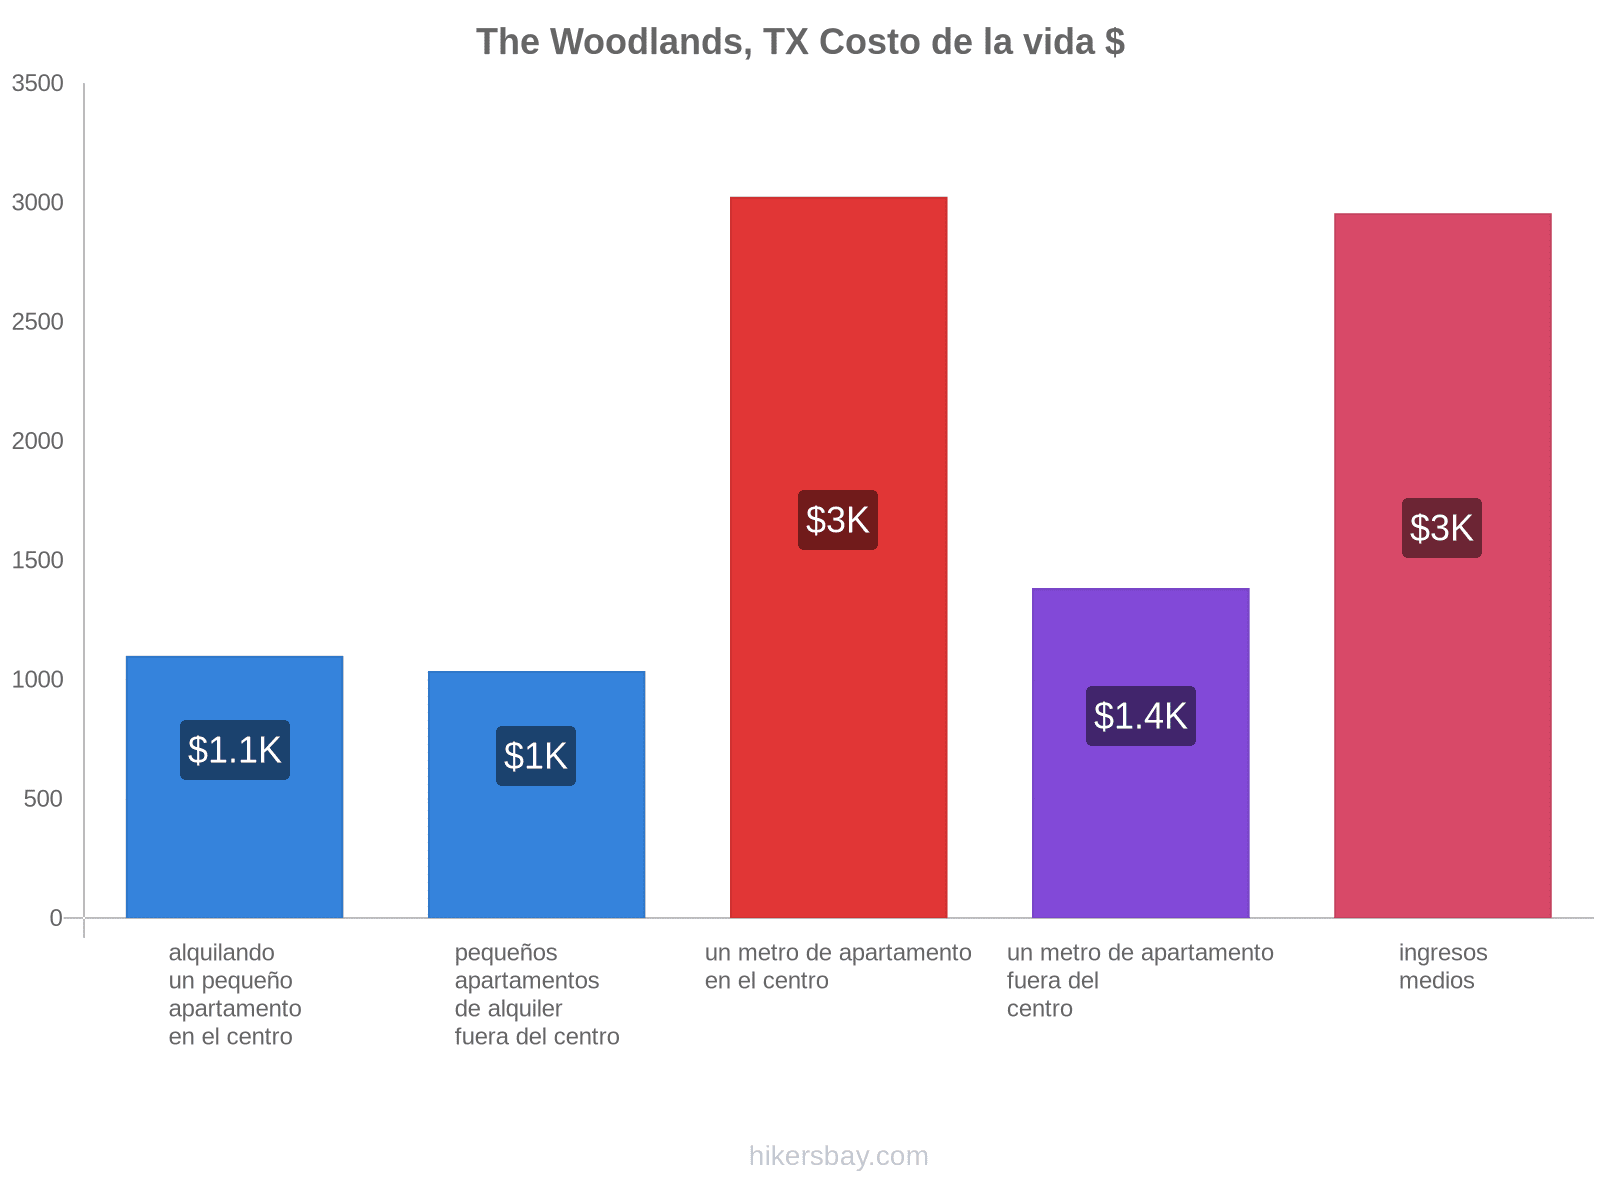 The Woodlands, TX costo de la vida hikersbay.com